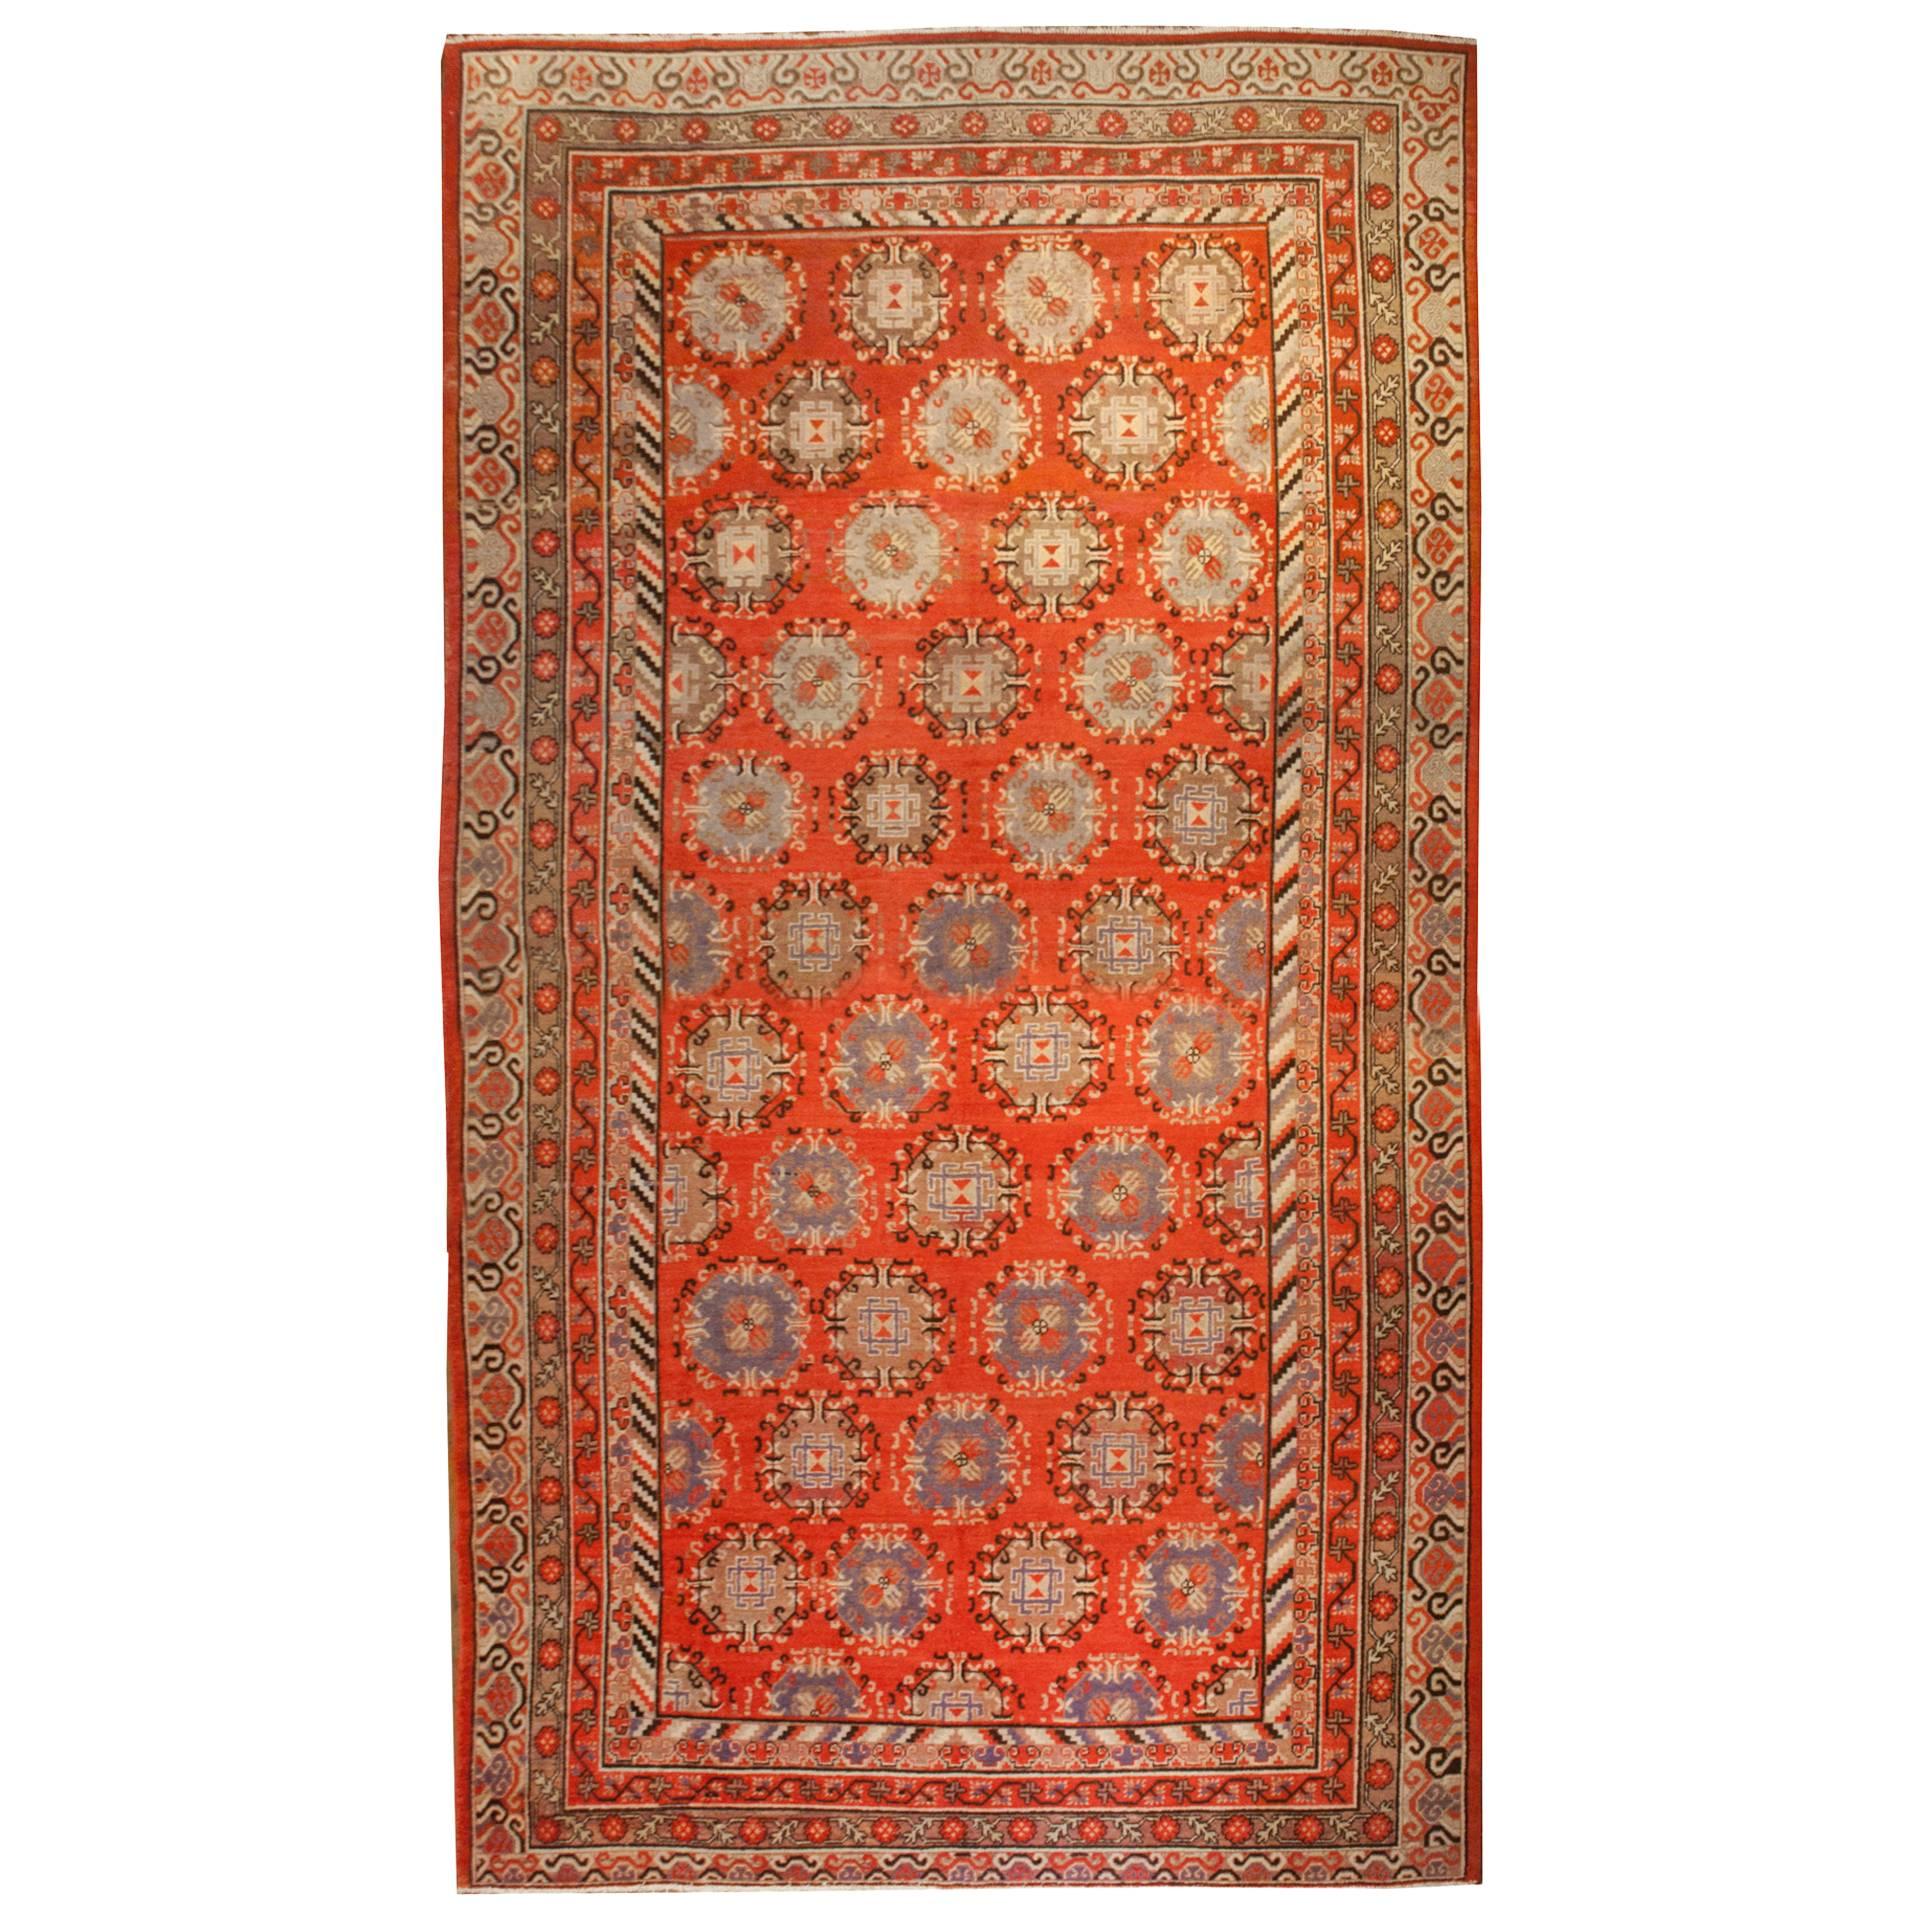 Khotan-Teppich, frühes 20. Jahrhundert